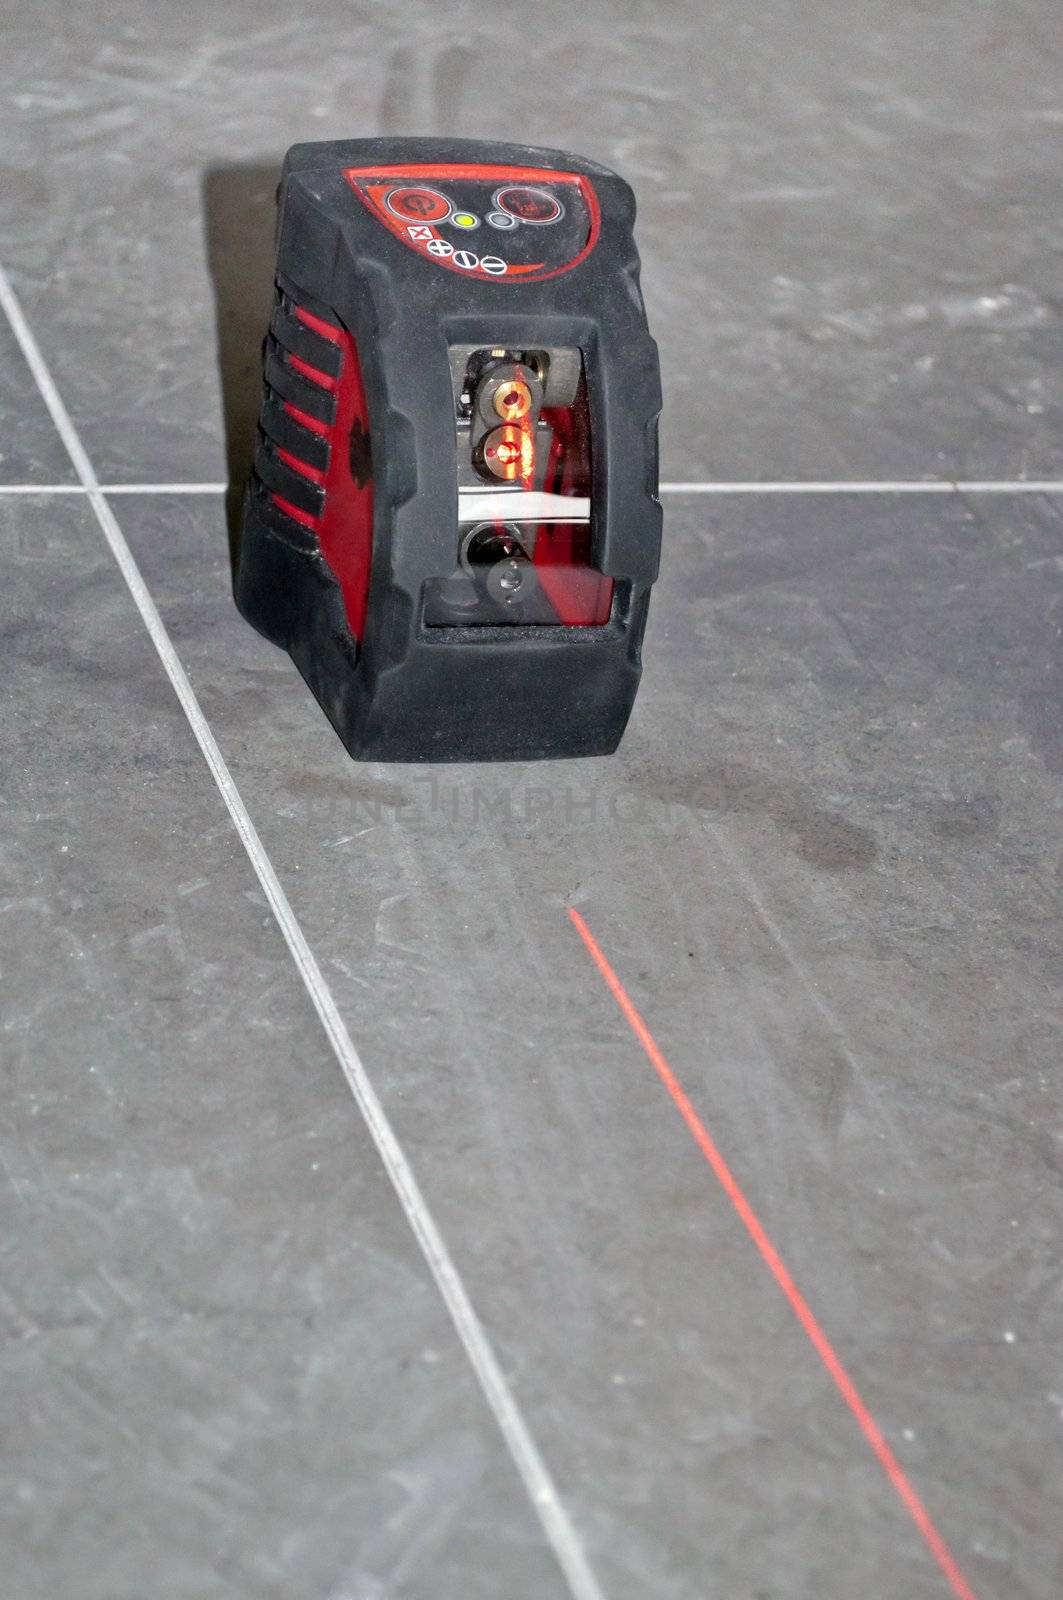 Laser Level tool by rigamondis